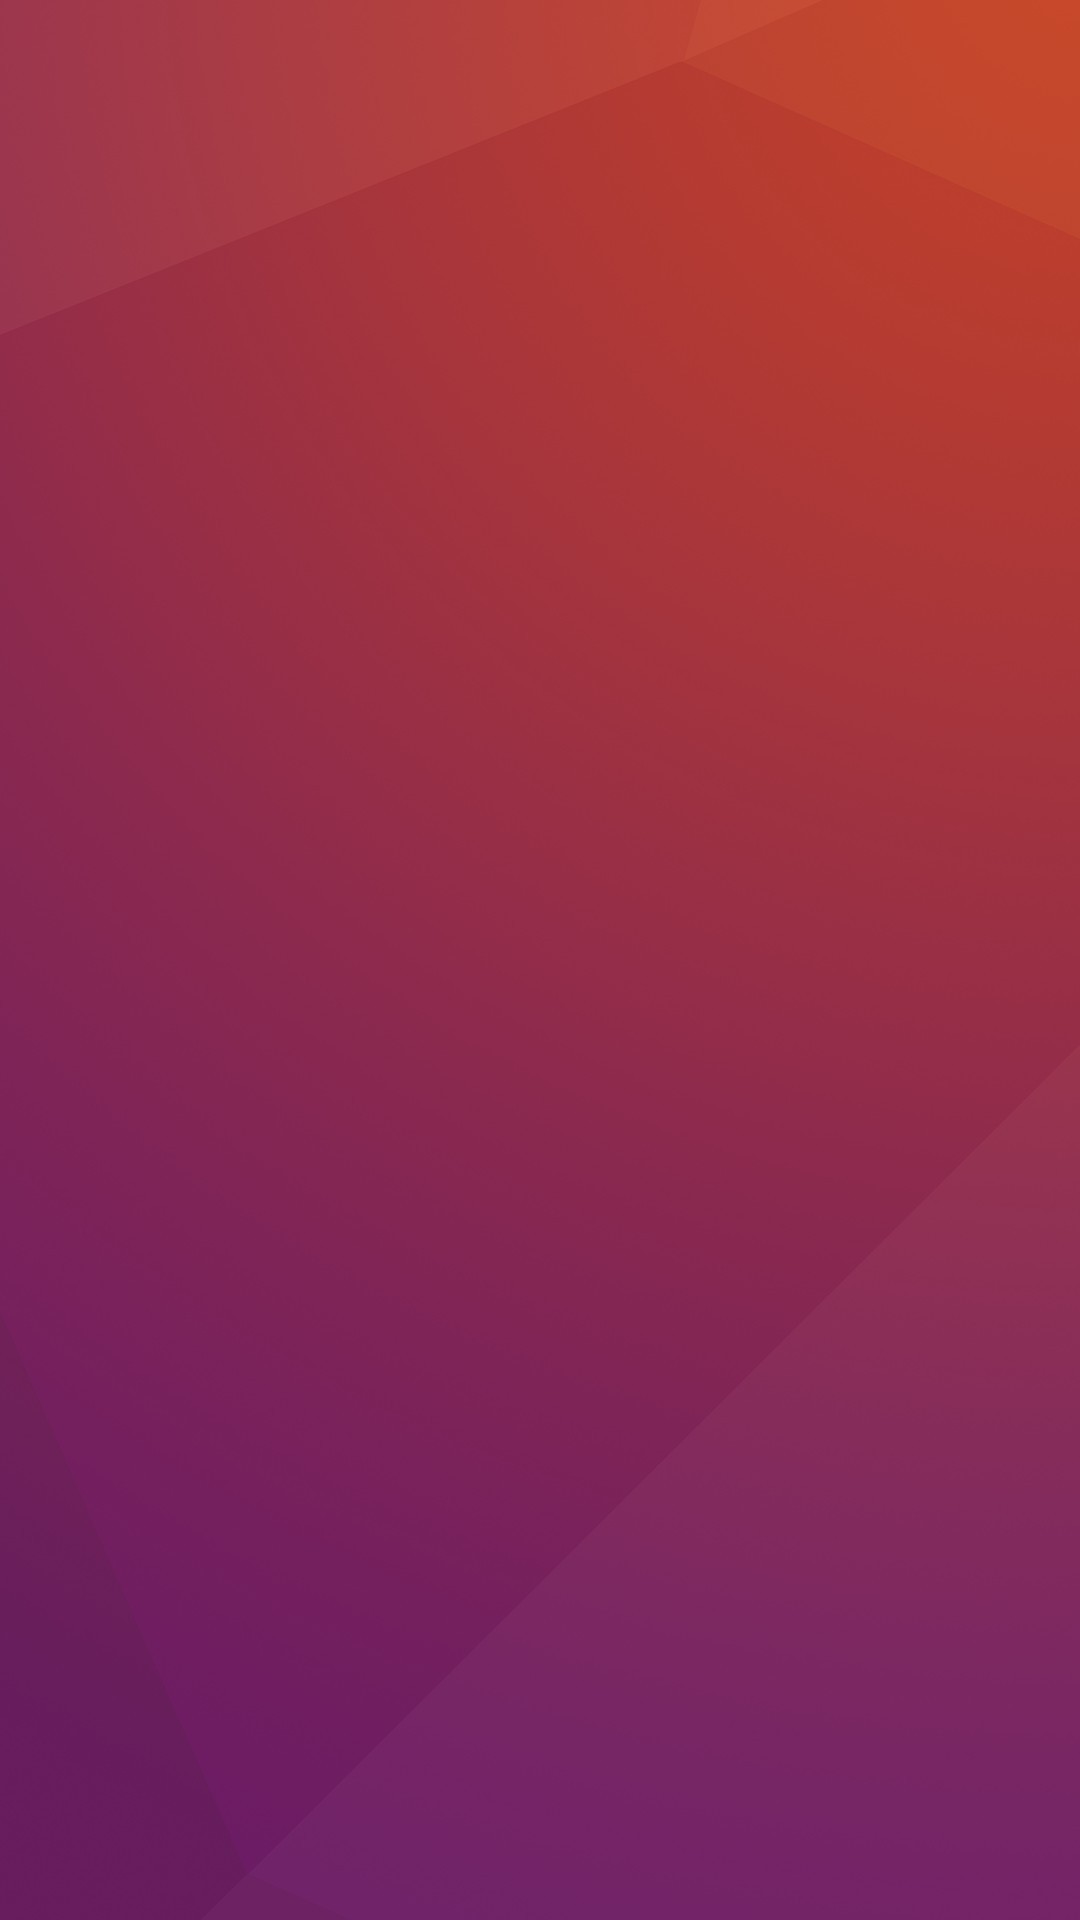 Ubuntu Lts Wallpaper Revealed For Desktop And Phone